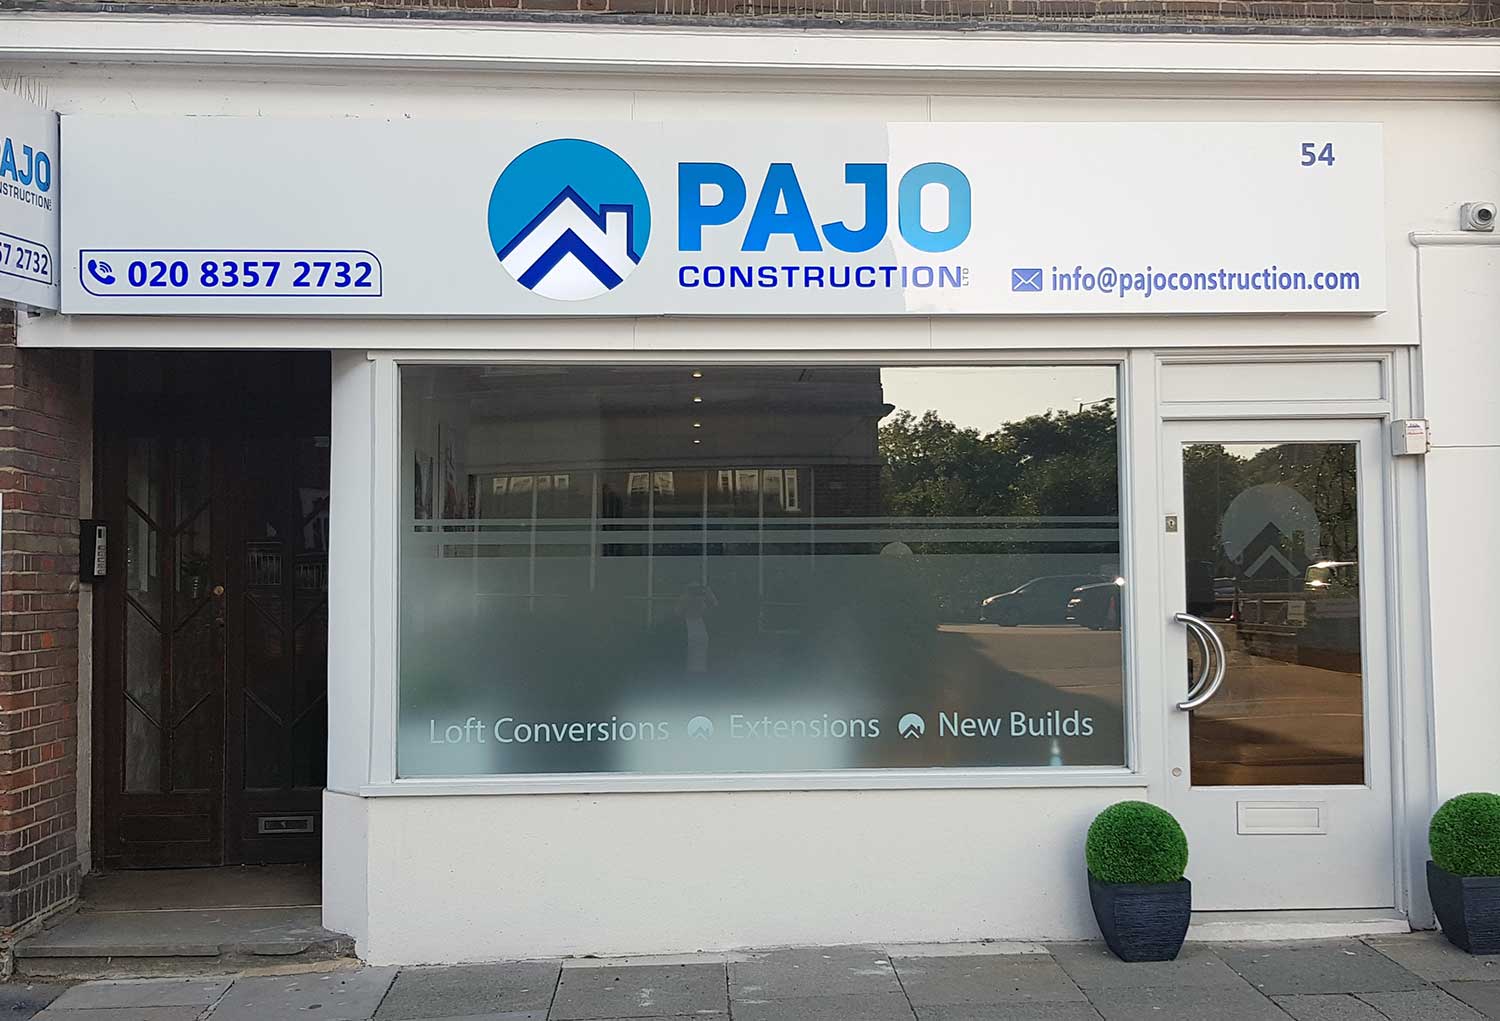 Pajo Construction shop front